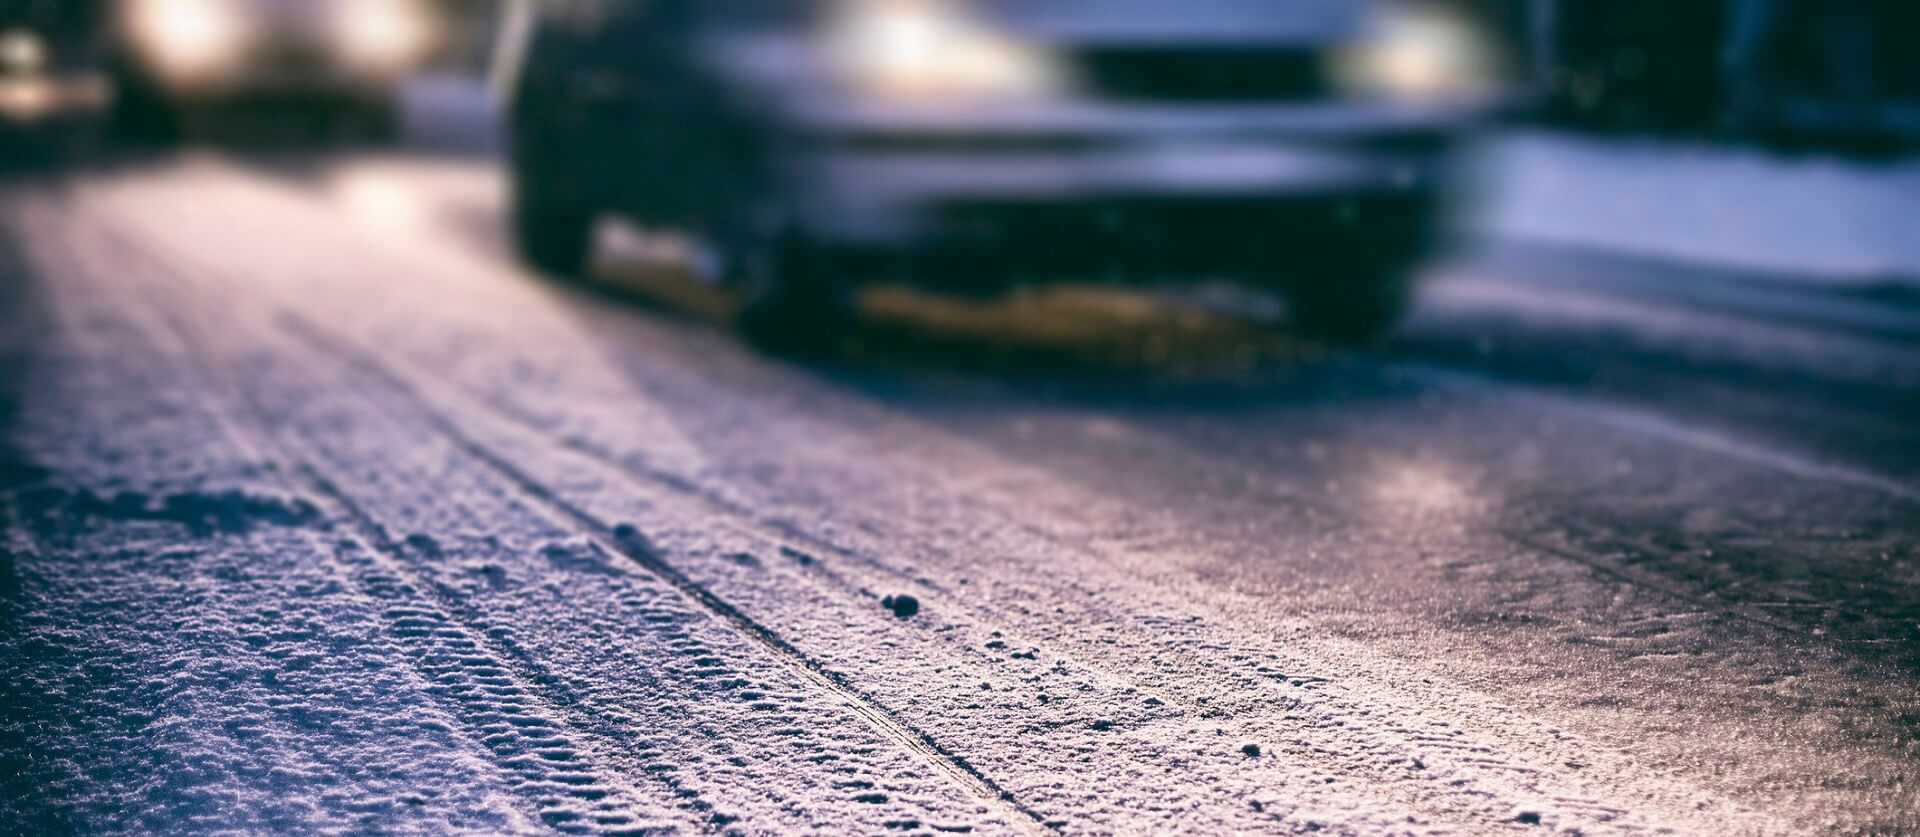 Vehicle on snowy roads